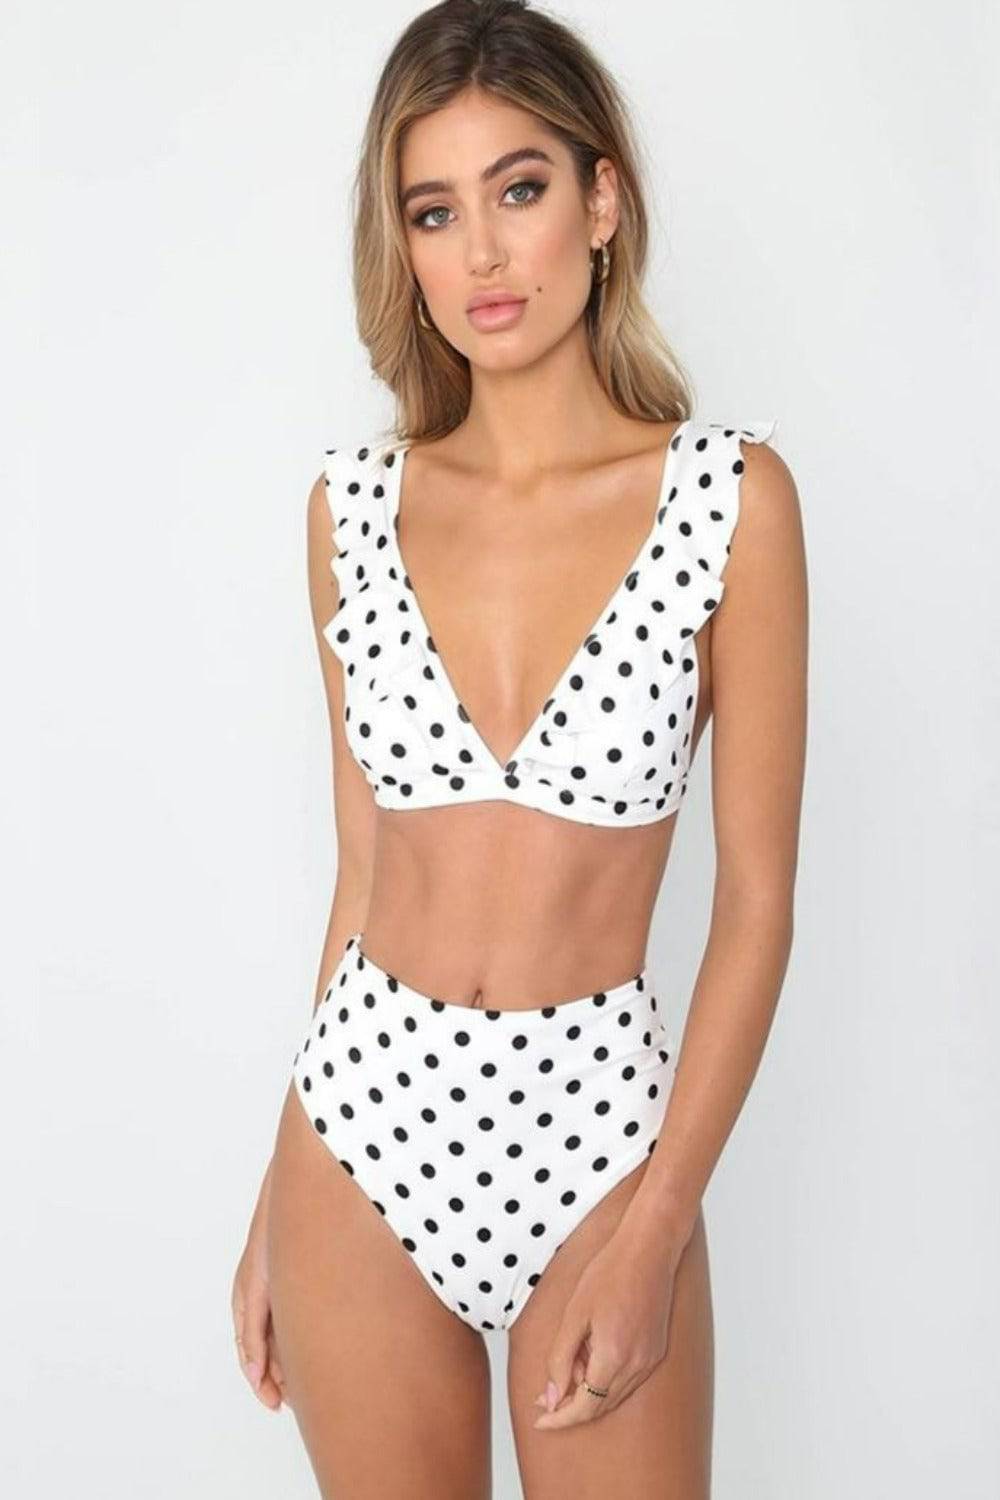 Rachel Polka Dot Ruffle High Waisted White Bikini - TGC Boutique - Polka Dot Swimsuit